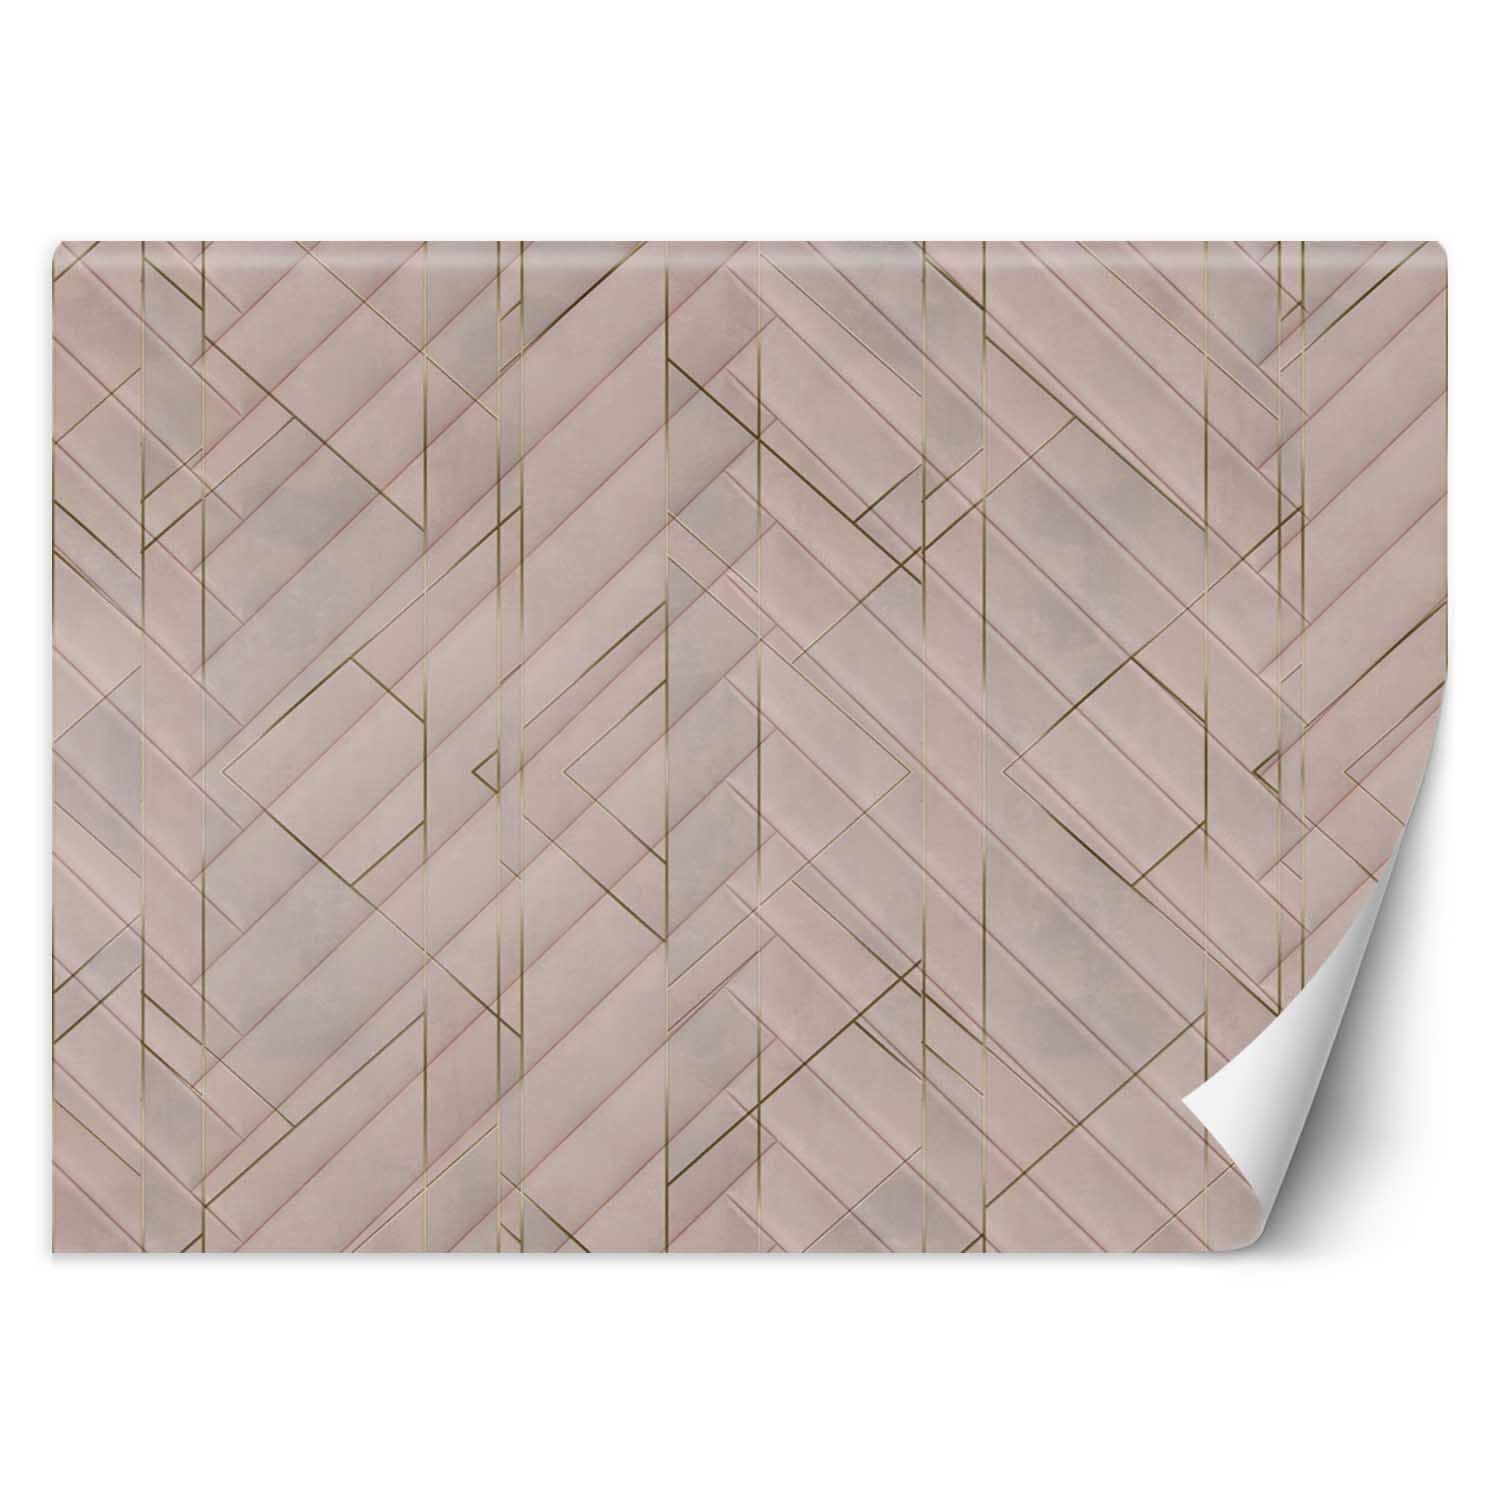 Trend24 – Behang – Geometrisch Patroon – Vliesbehang – Behang Woonkamer – Fotobehang – 450x315x2 cm – Incl. behanglijm